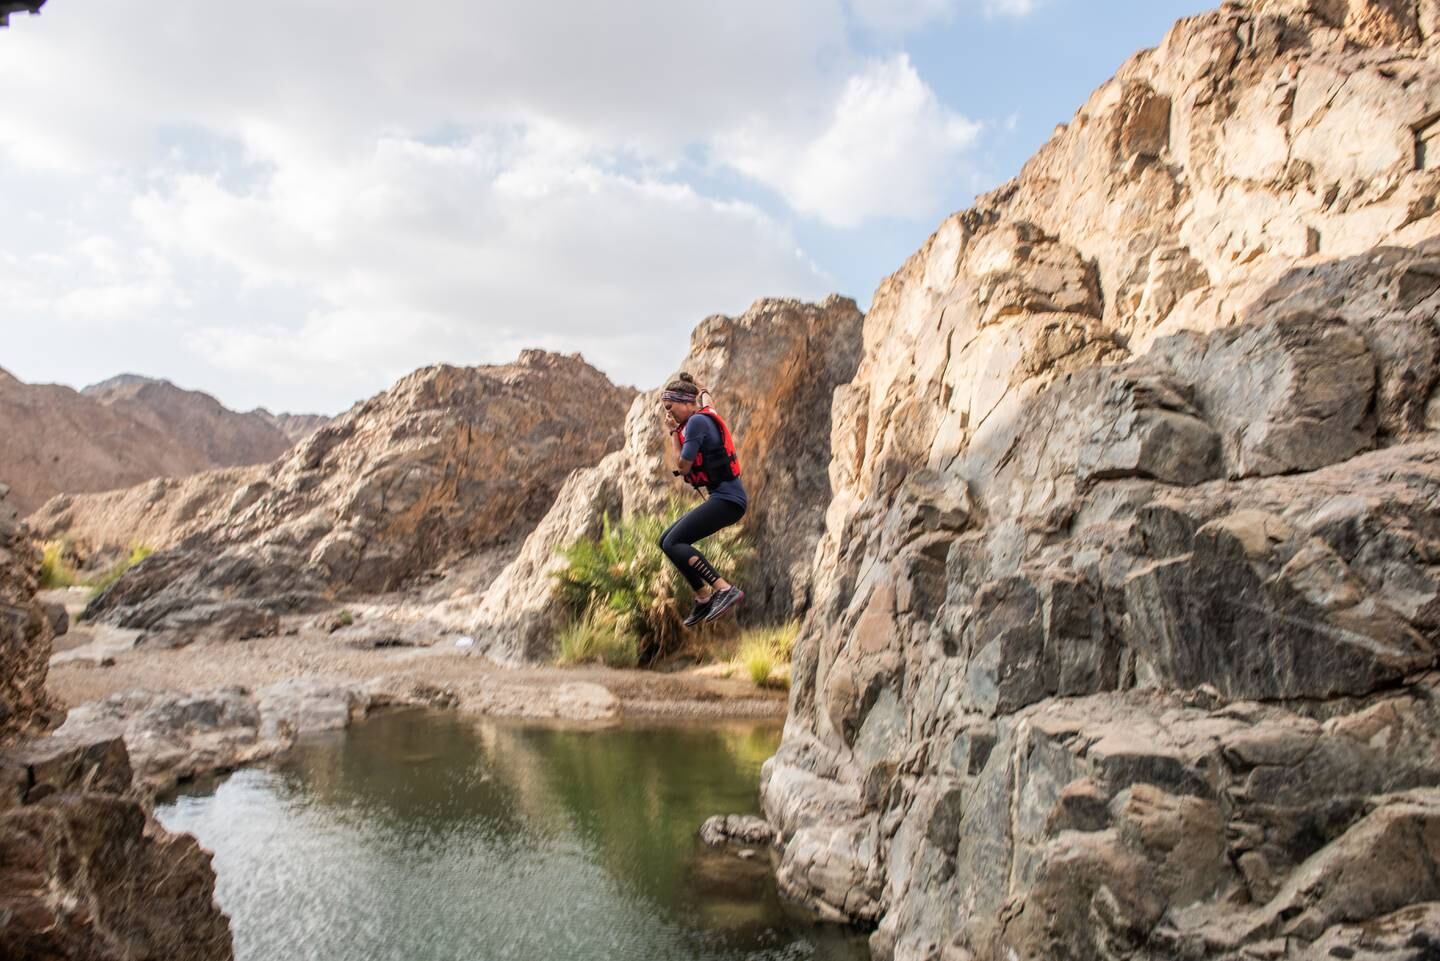 Wadi Showka is good for mountain biking and jumping into the water pools. Photo: Fadi Hachicho